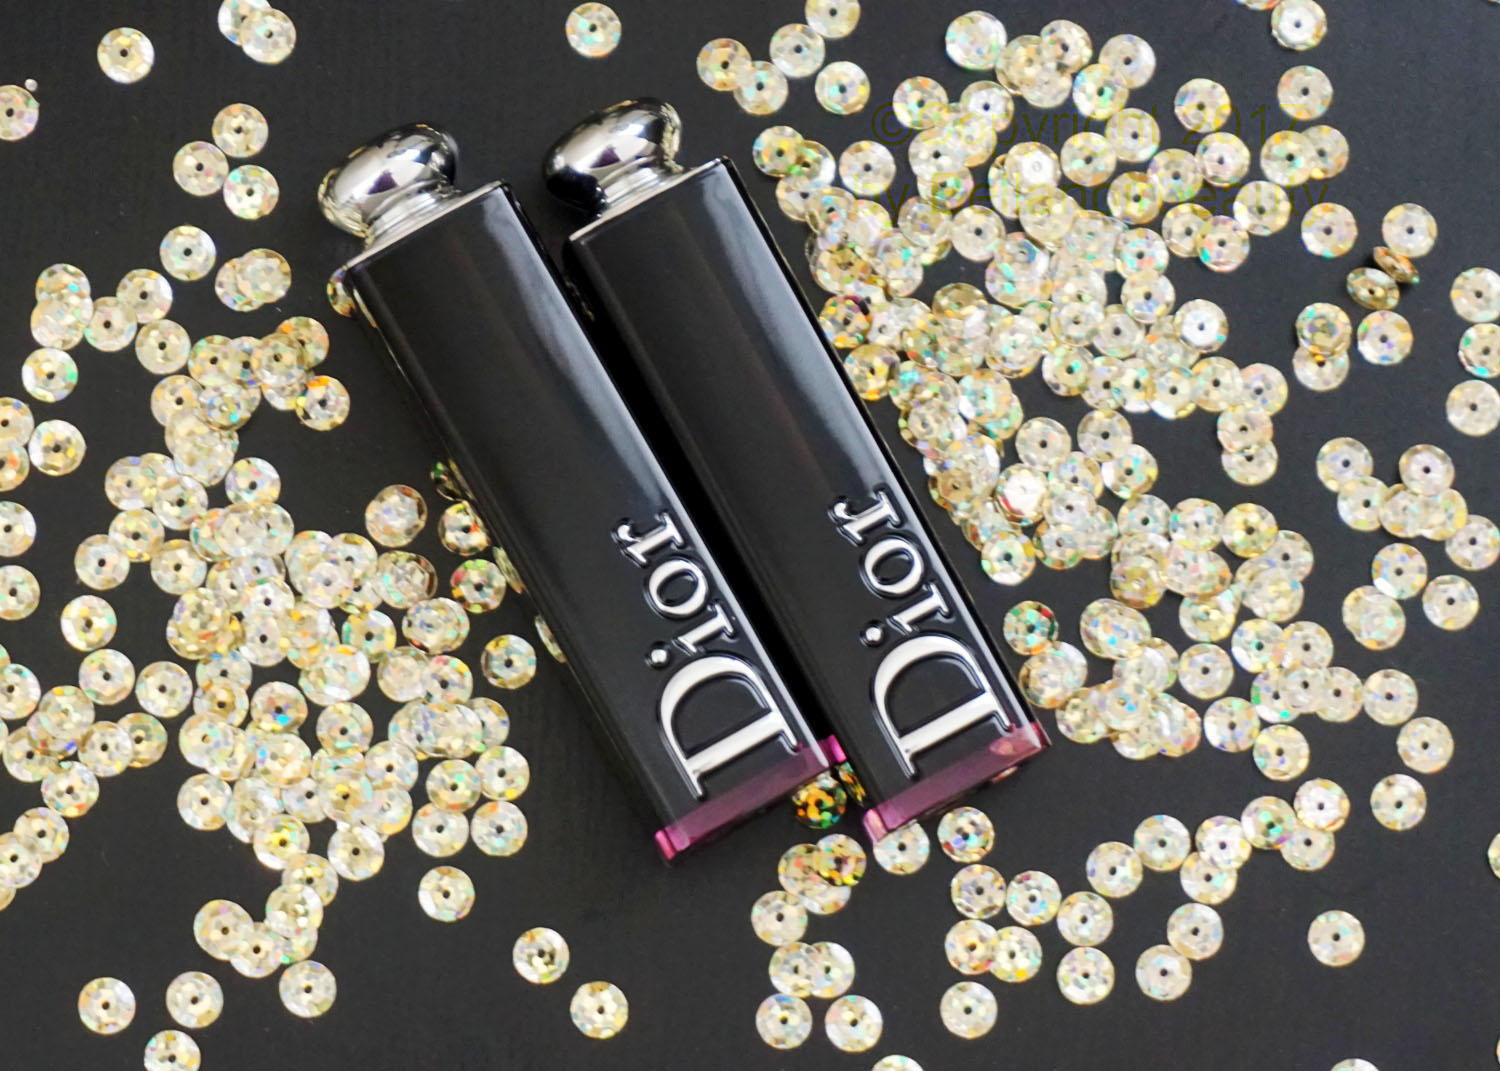 Dior Addict Lacquer Sticks